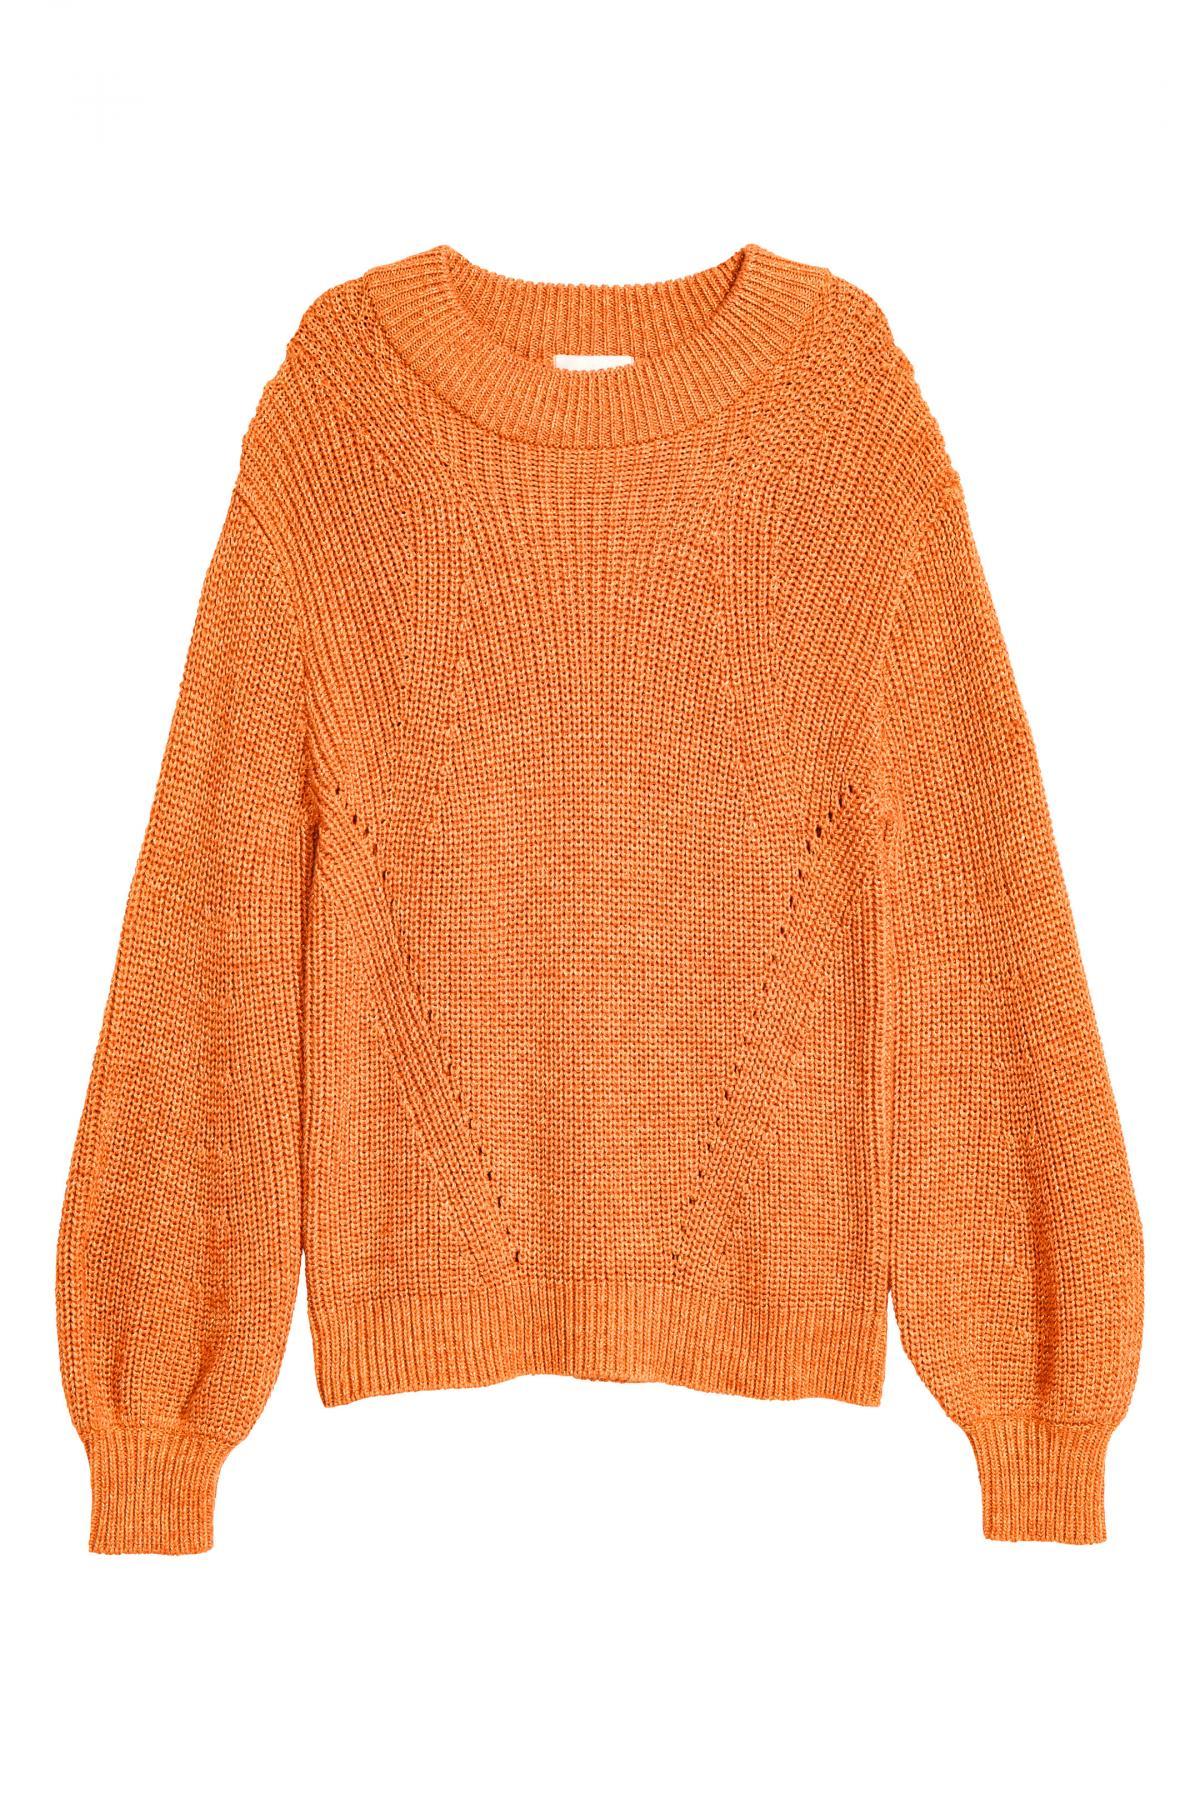 h&m orange sweater